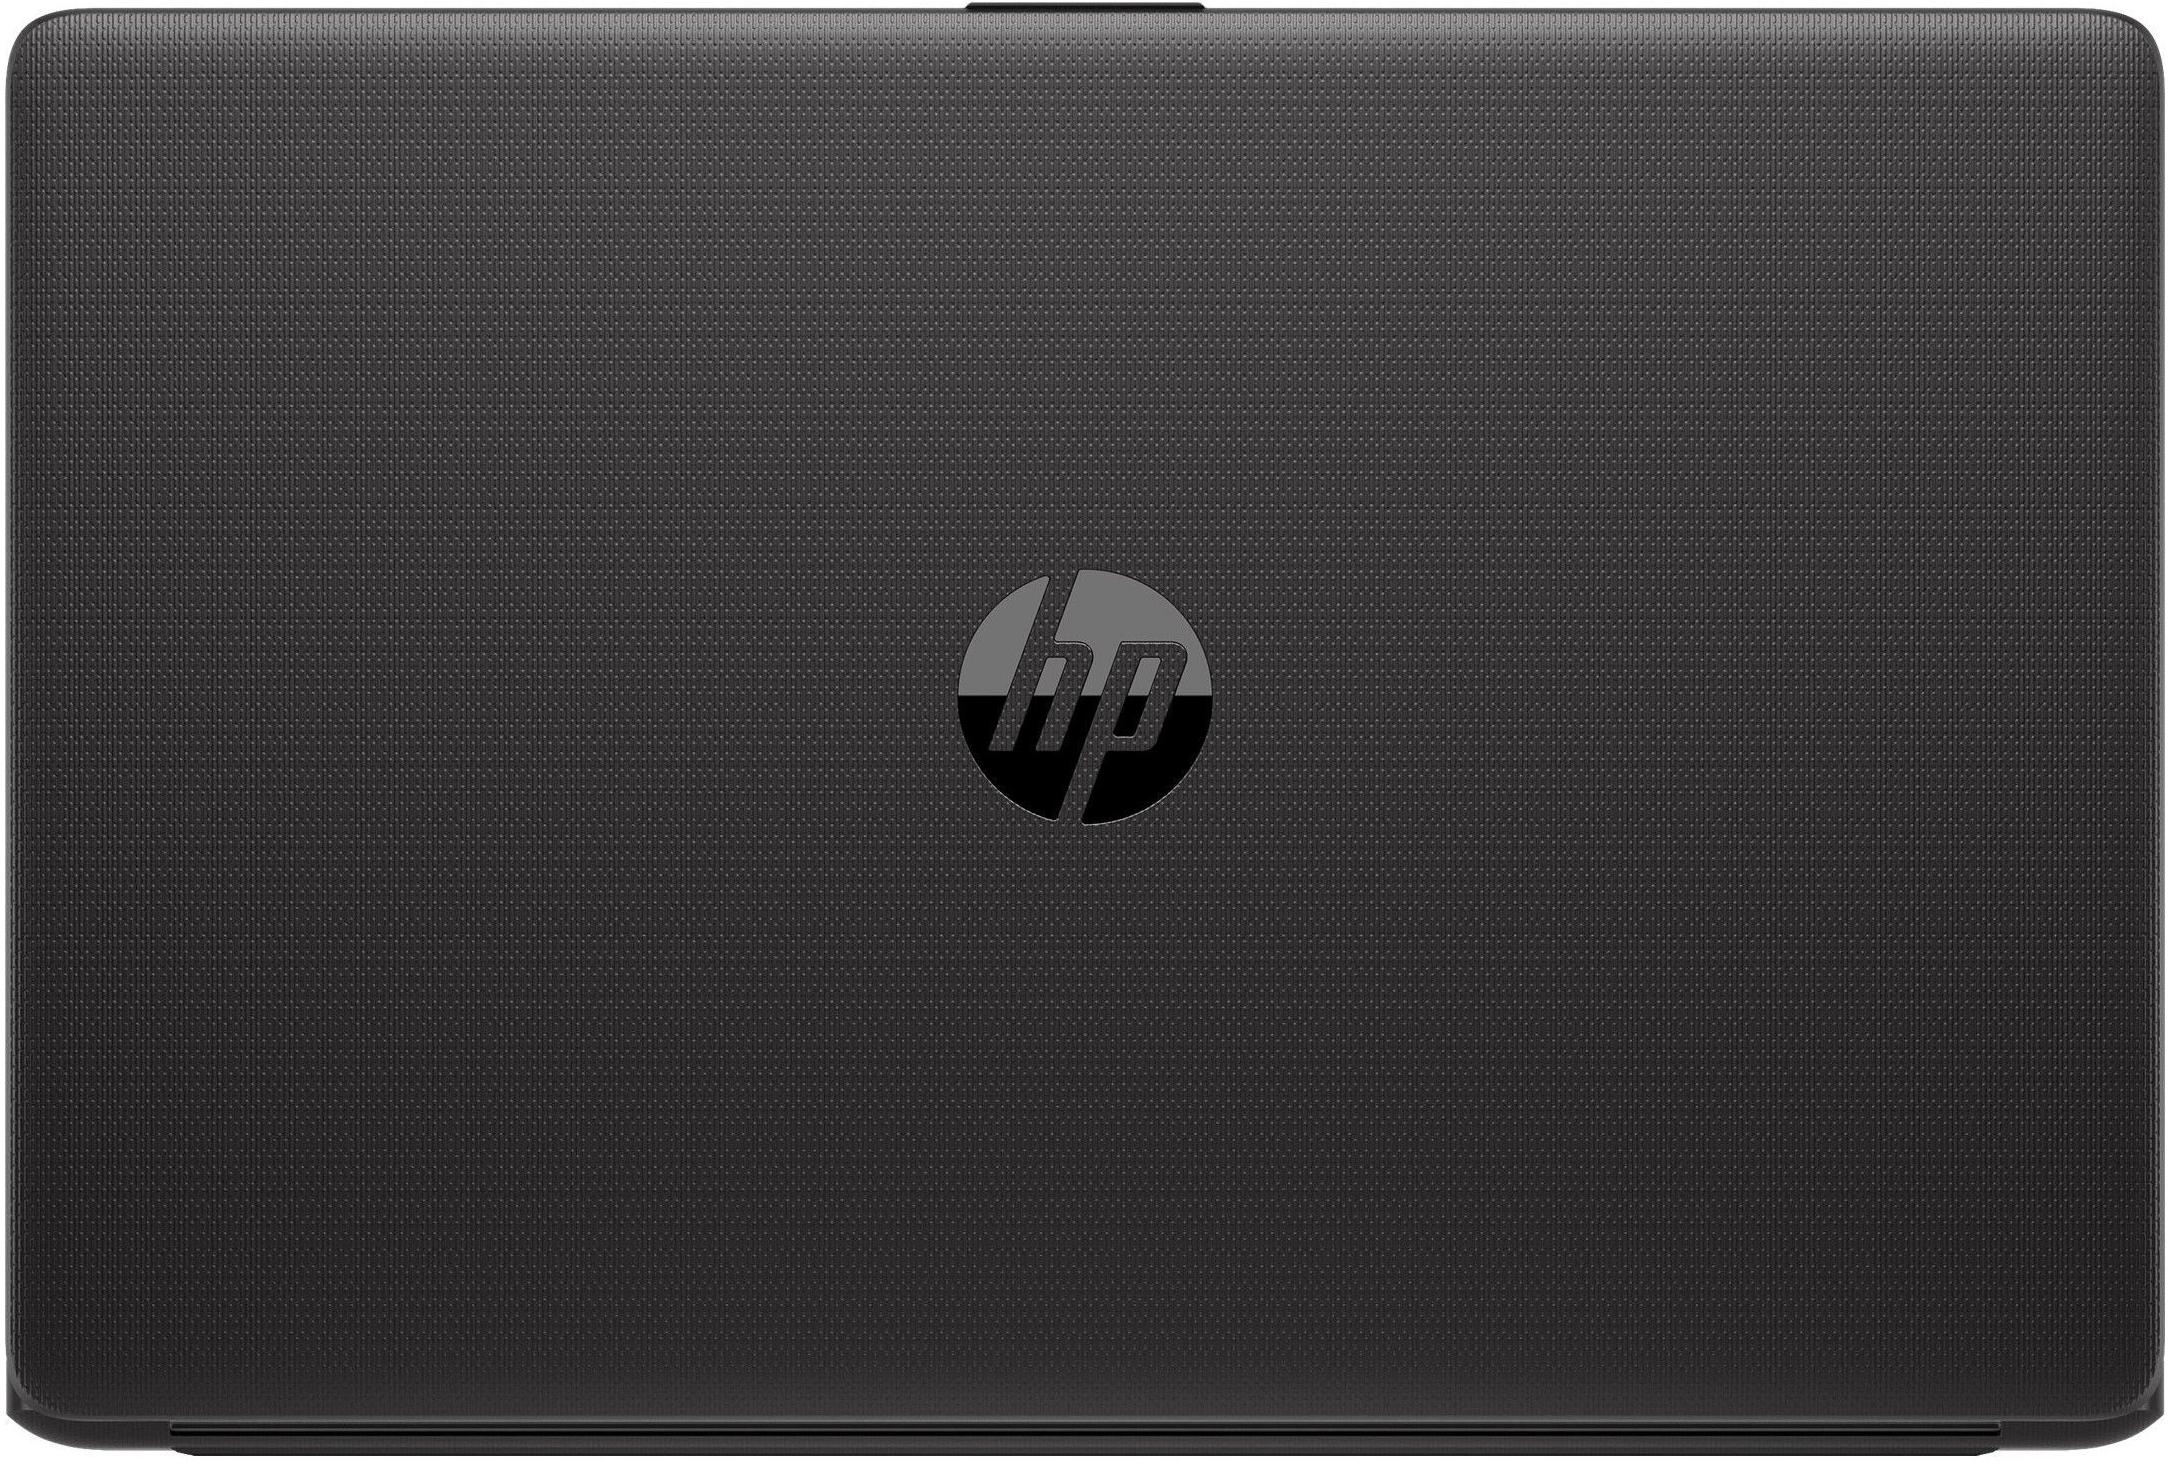 Hewlett Packard Купить Ноутбук